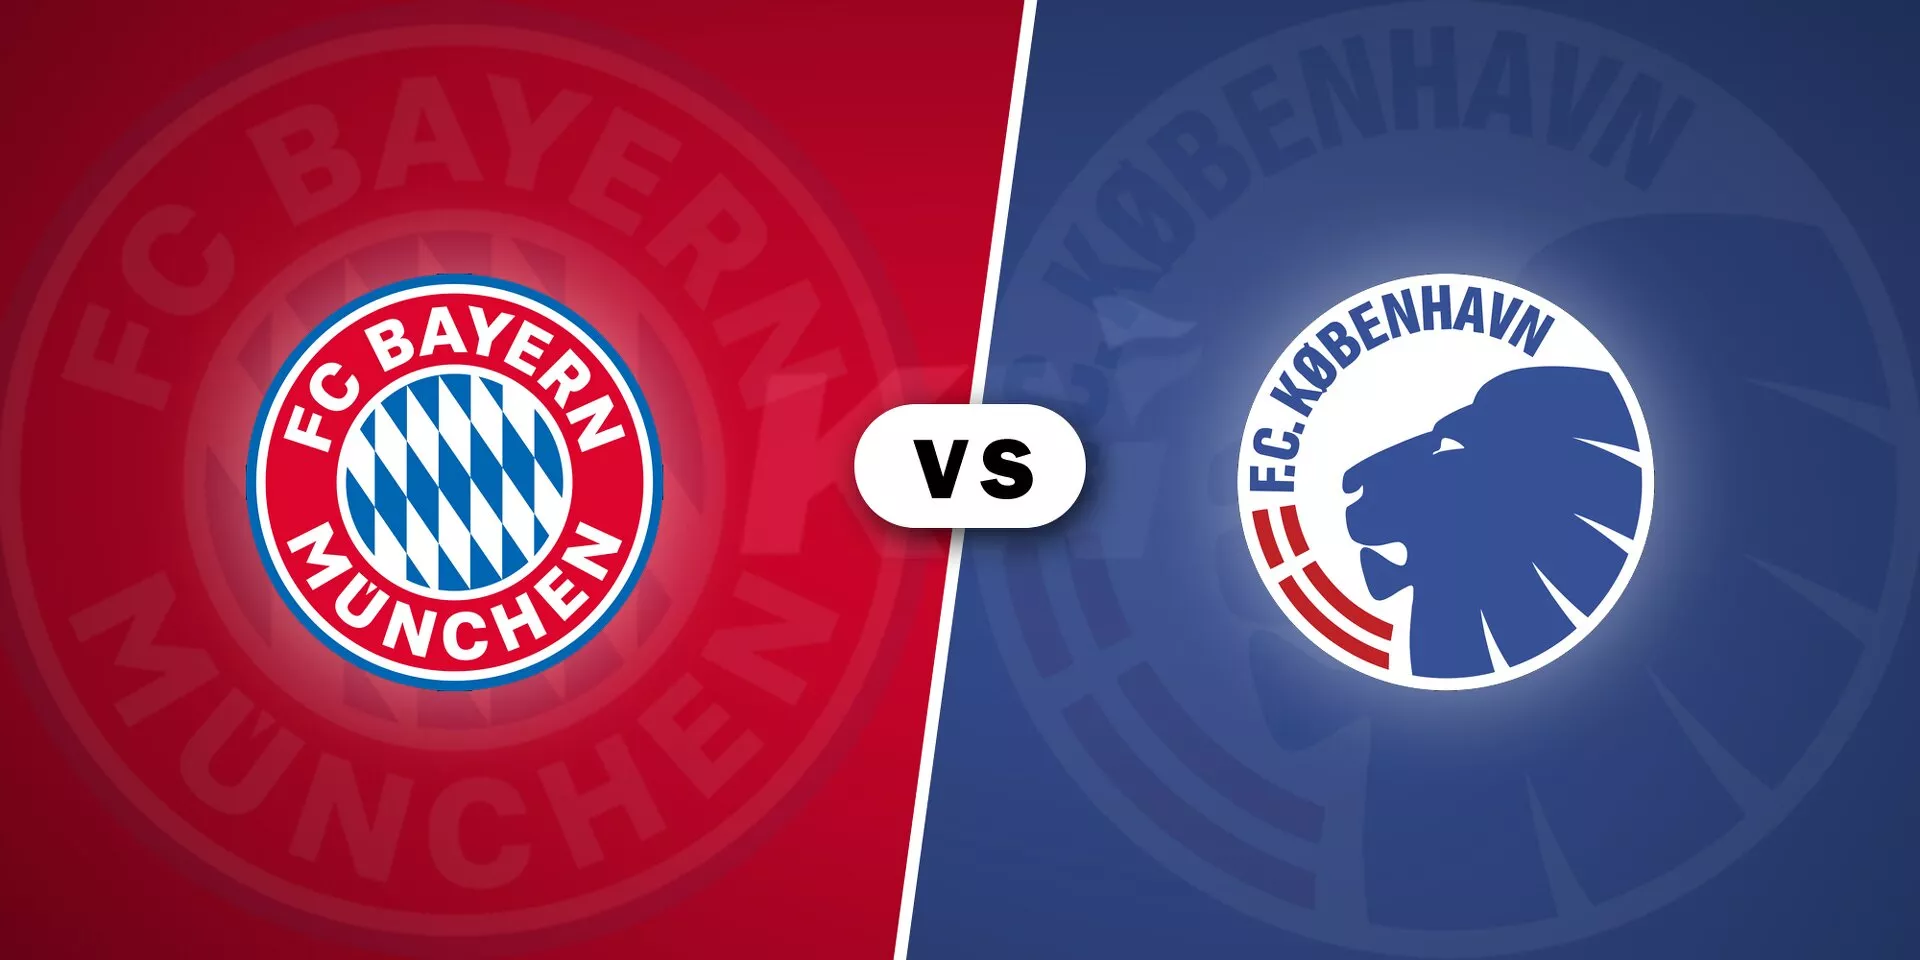 Bayern Munich vs Copenhagen: Where and how to watch?